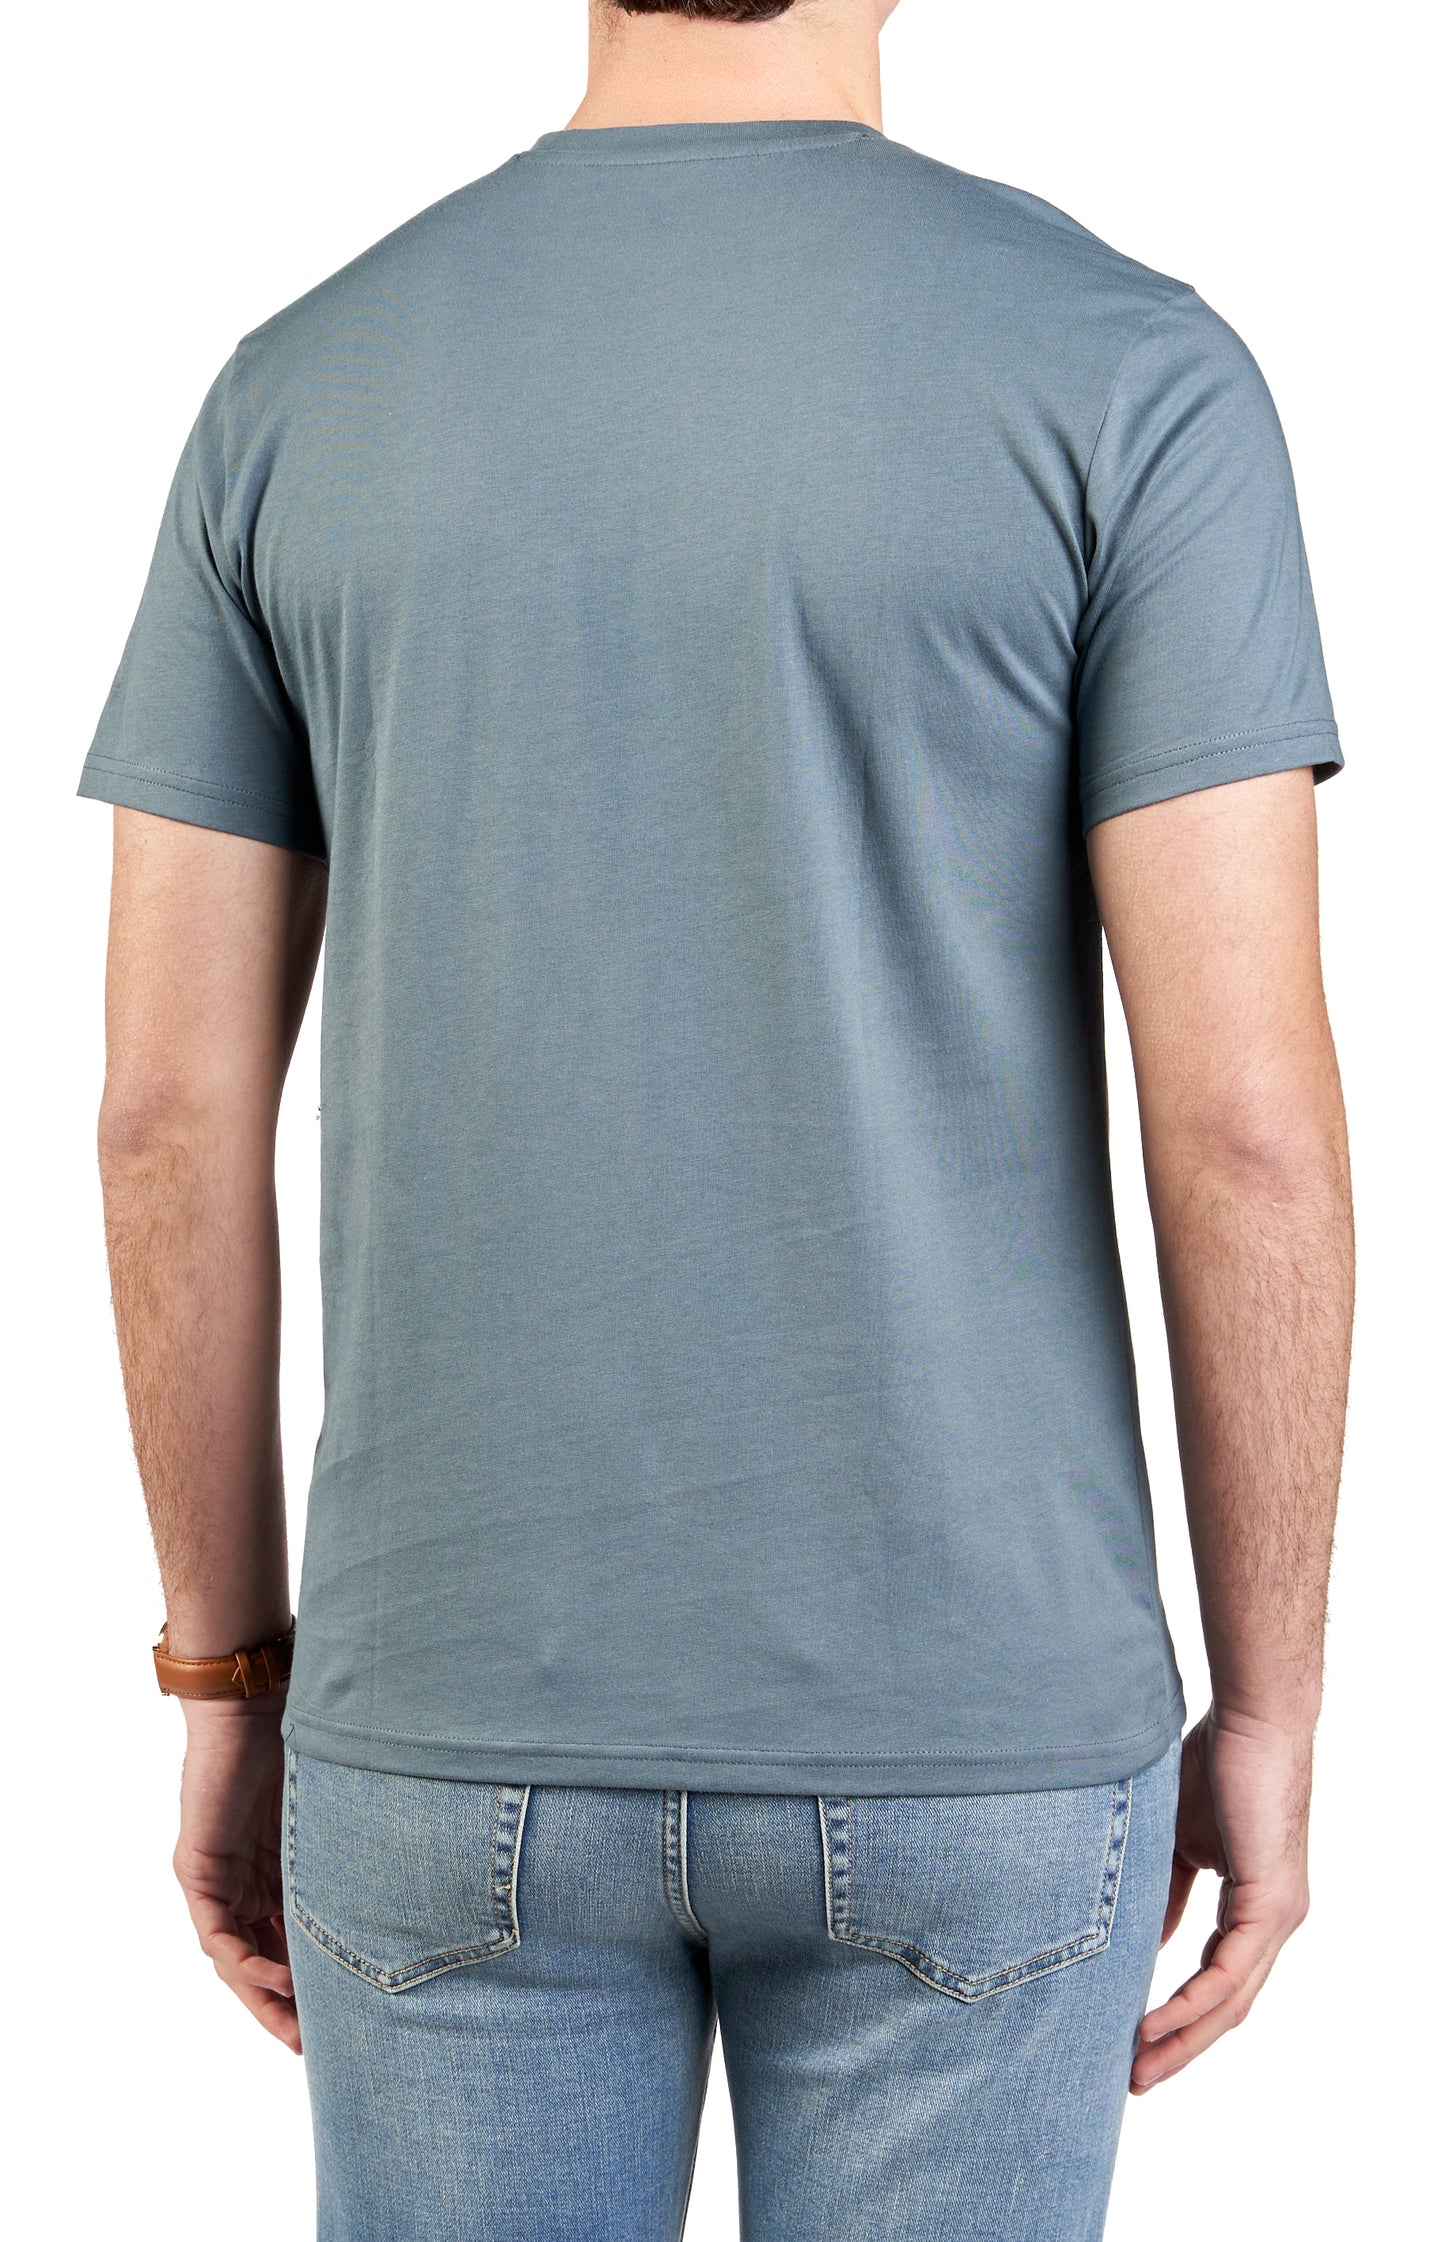 Vustra Steel Blue Short-Sleeve T-Shirt